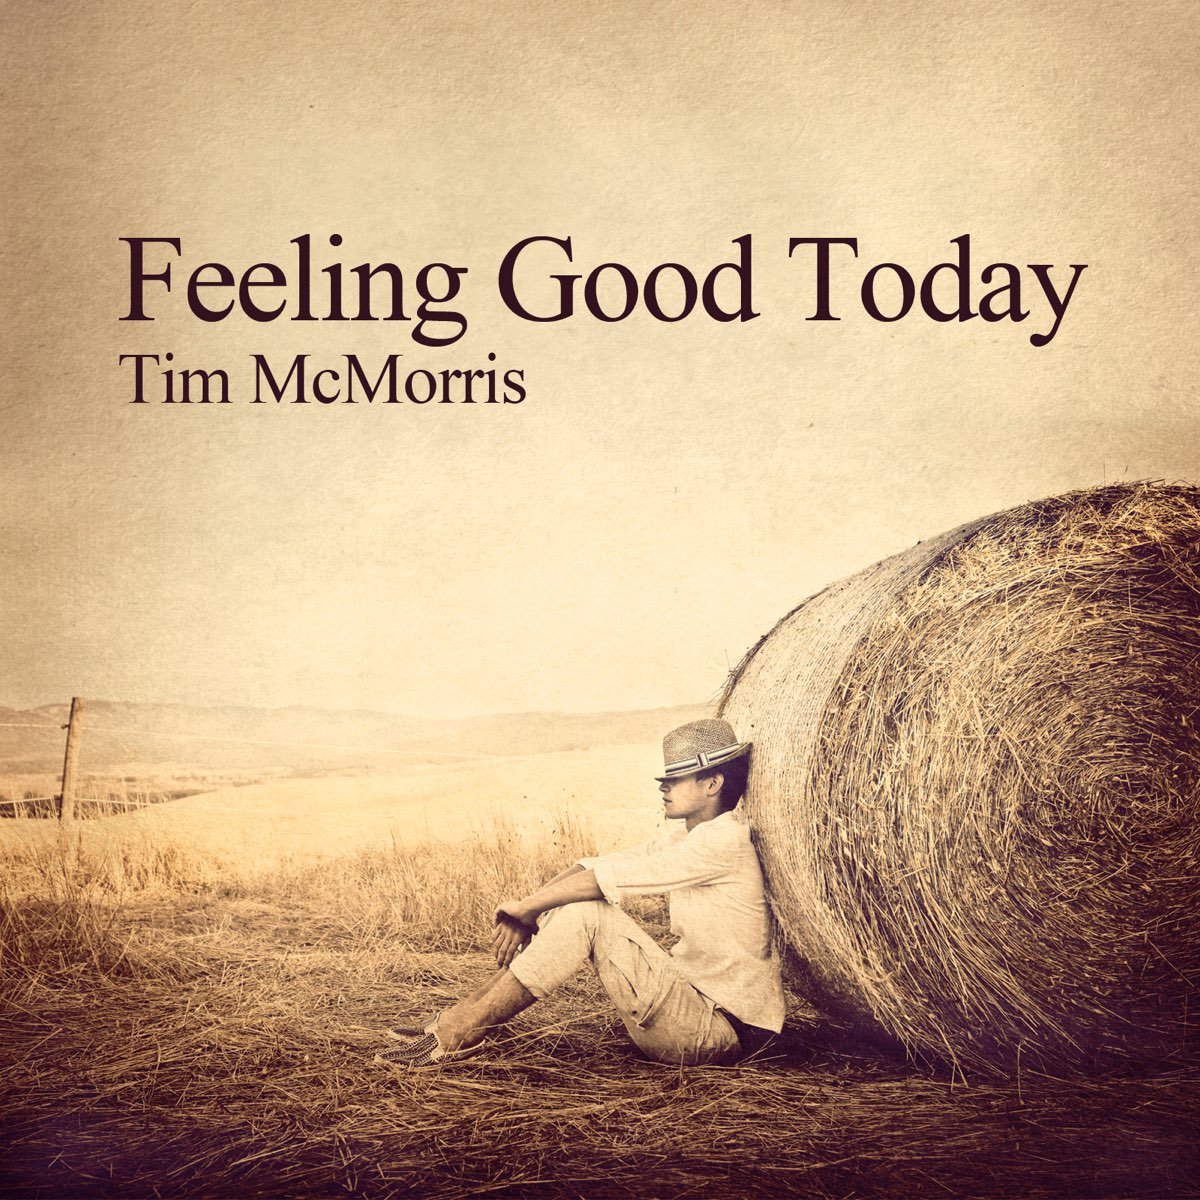 Sometimes good feeling. Tim MCMORRIS. Tim MCMORRIS tim MCMORRIS. Good feeling. Tim MCMORRIS Alive.